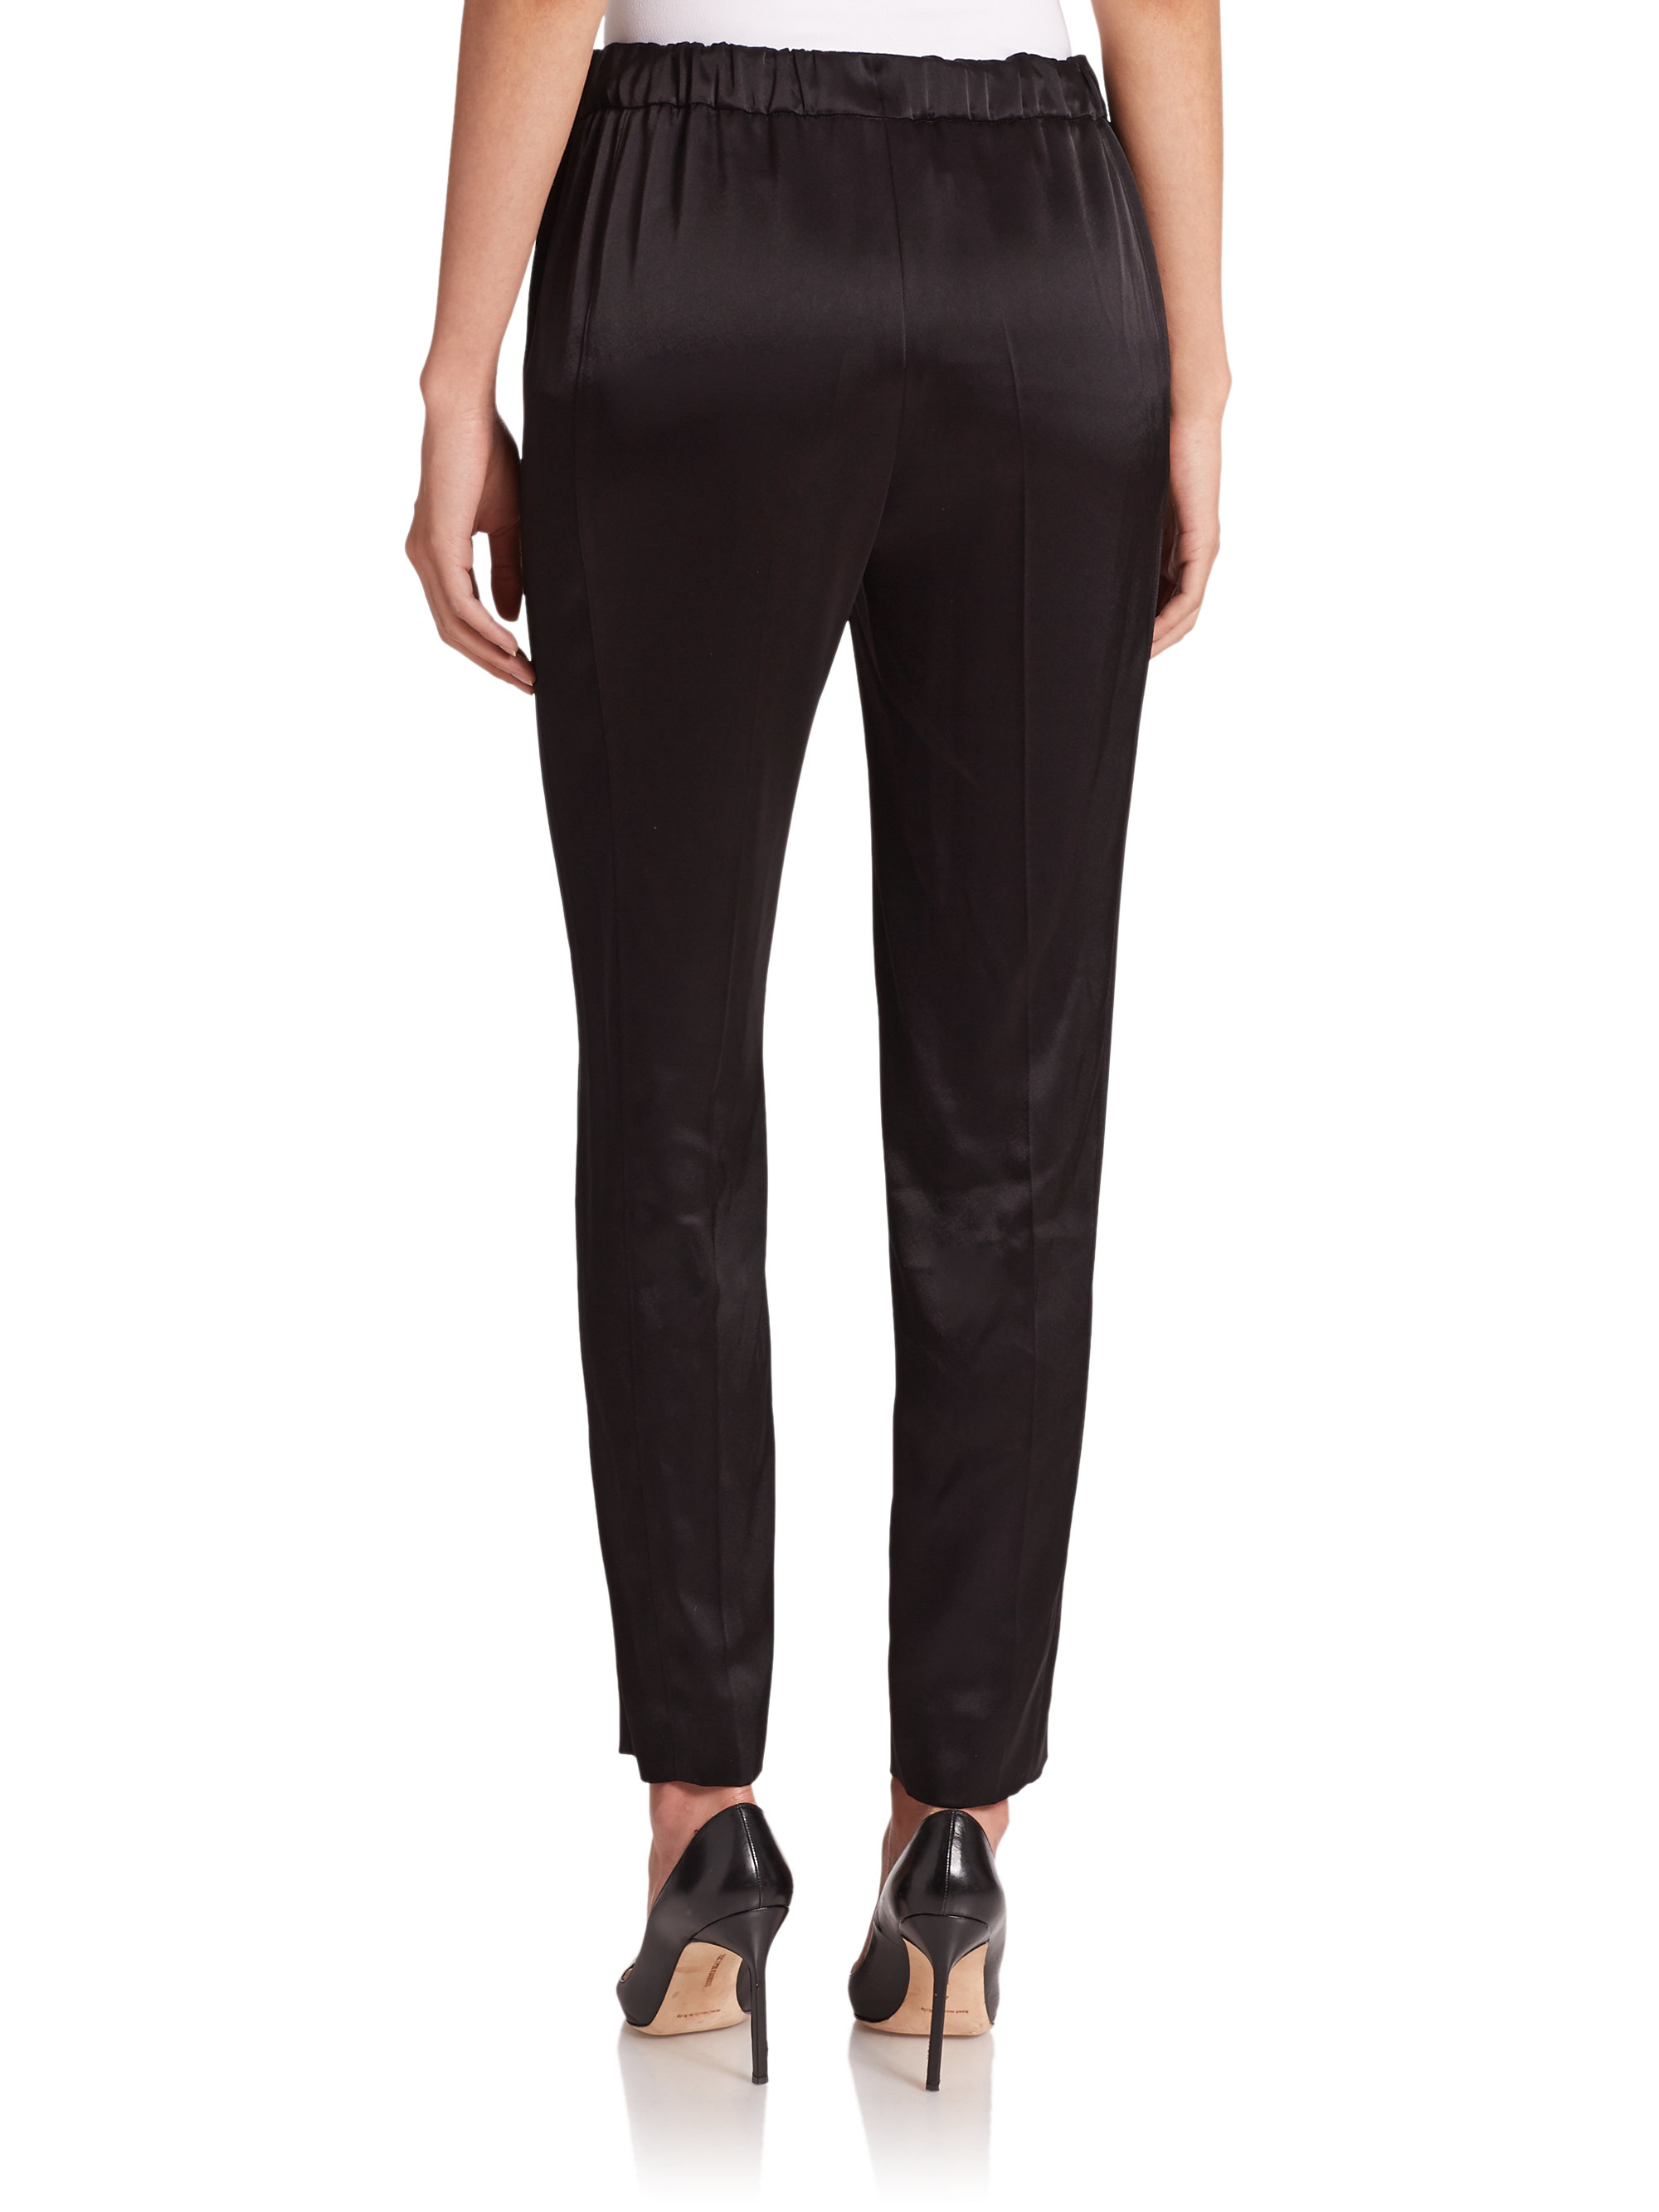 Buy Black Trousers  Pants for Women by ADDYVERO Online  Ajiocom